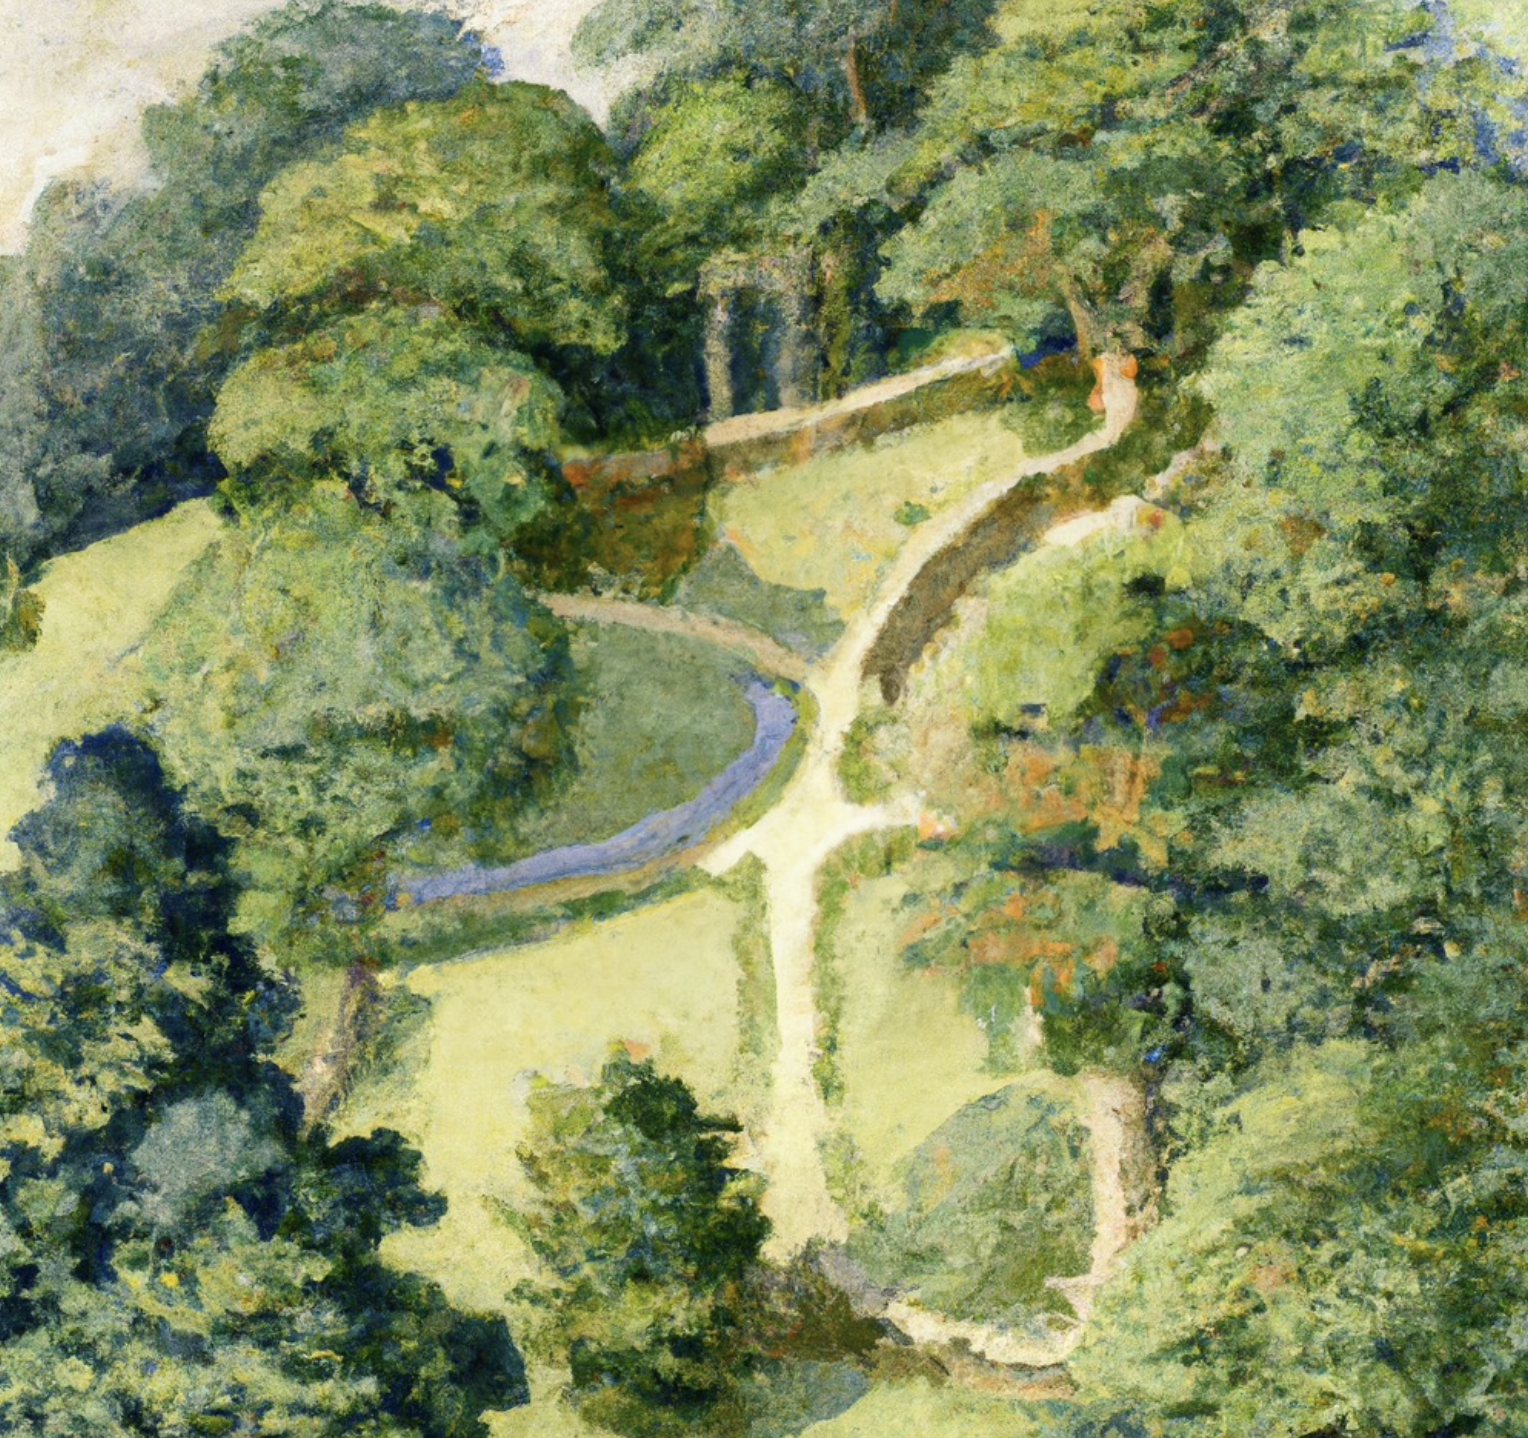 Teaser image showing an illustration of a walled garden, aerial shot